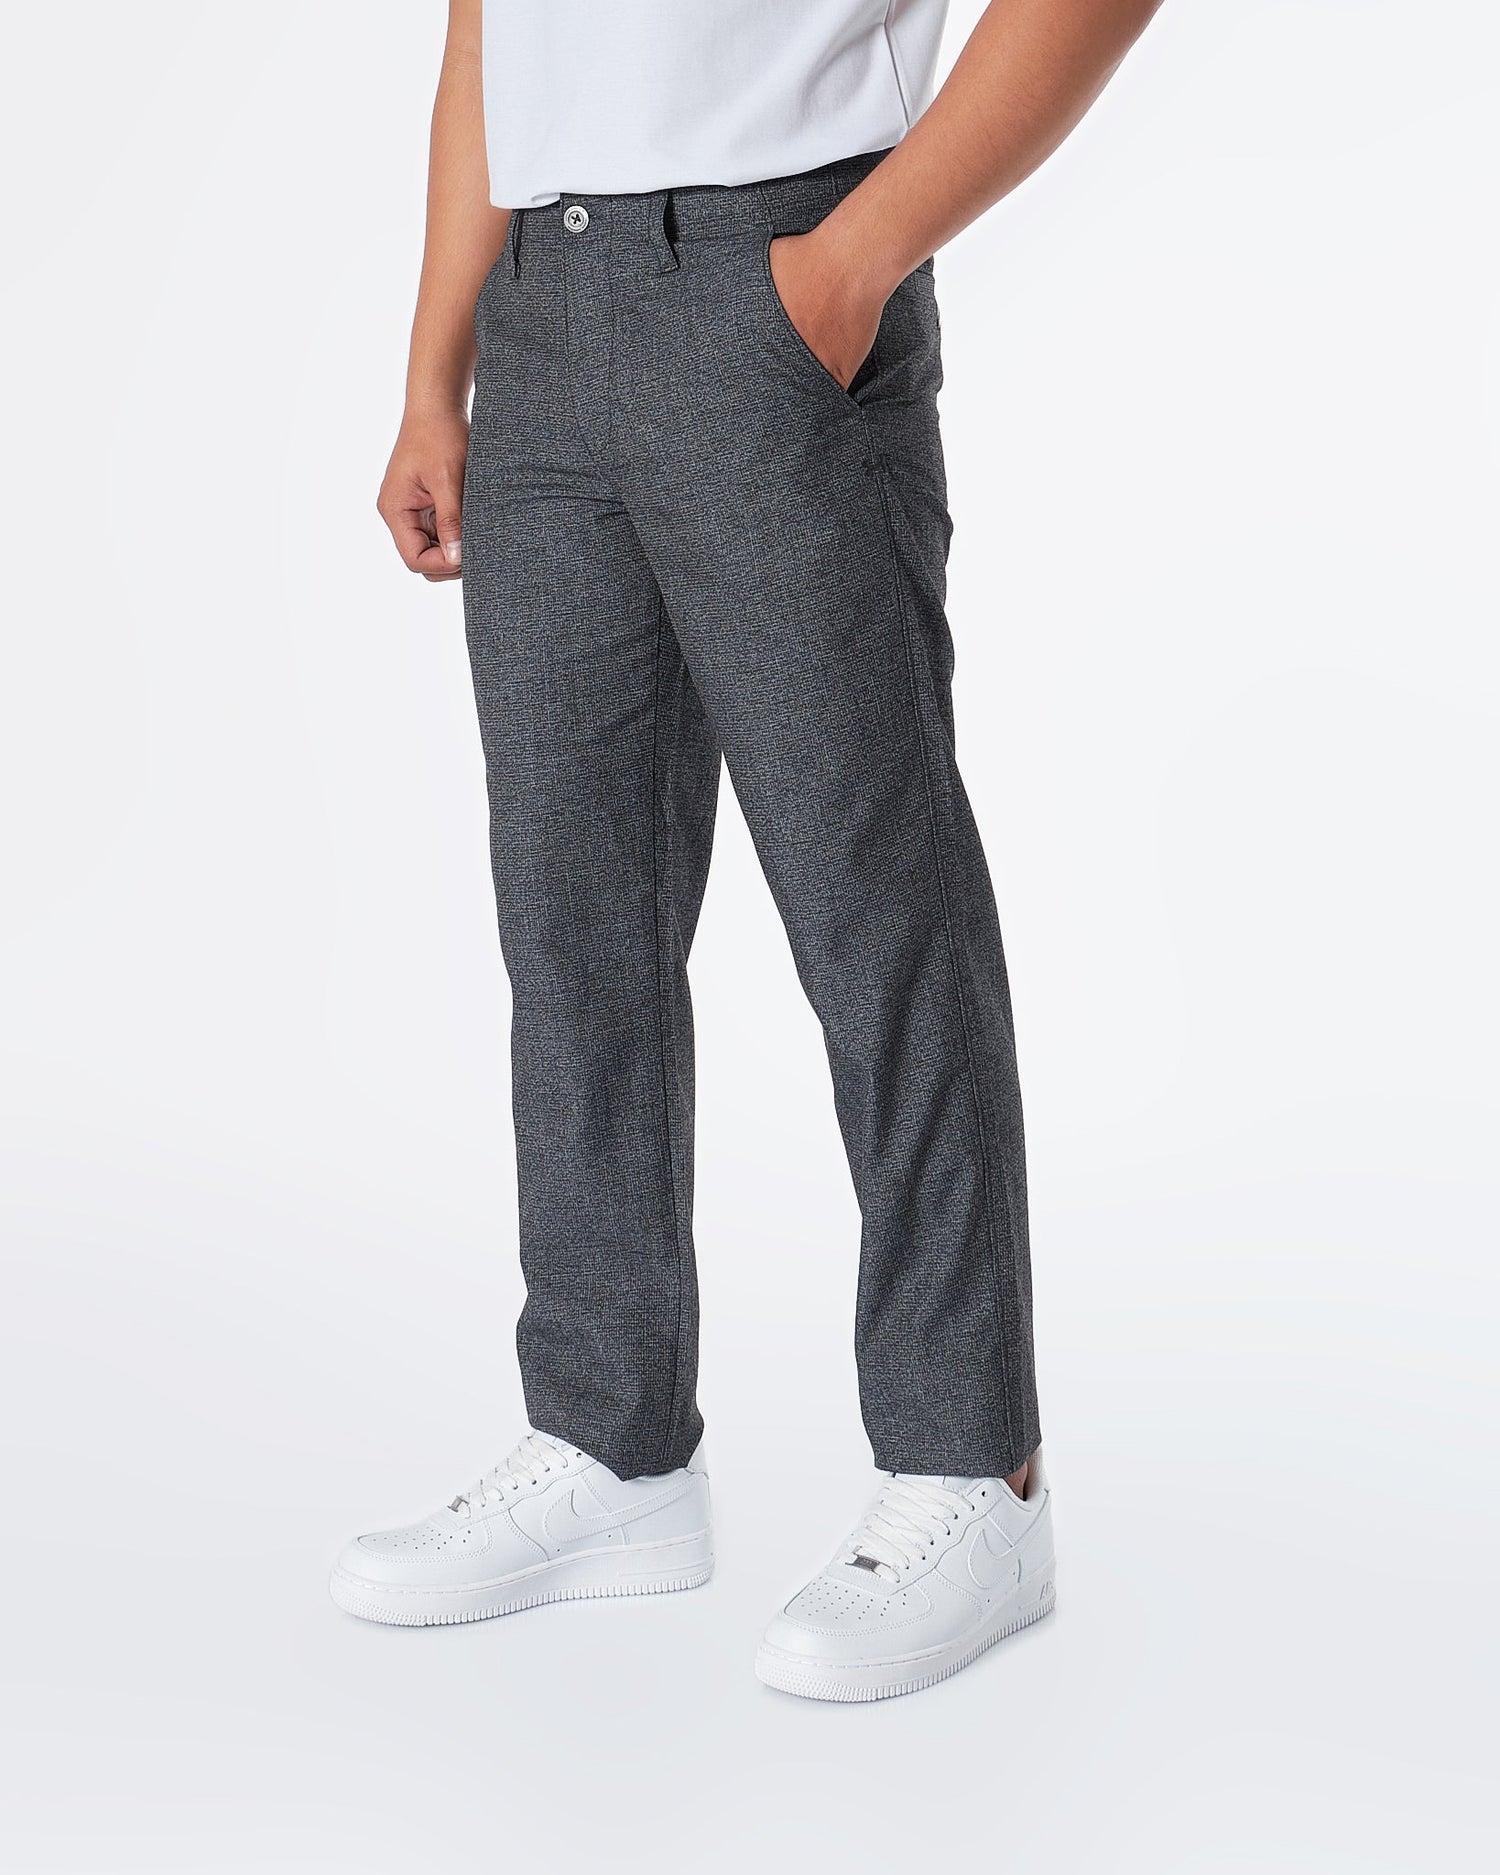 MOI OUTFIT-UA Casual Fit Men Dark Grey Khaki Pants 28.90